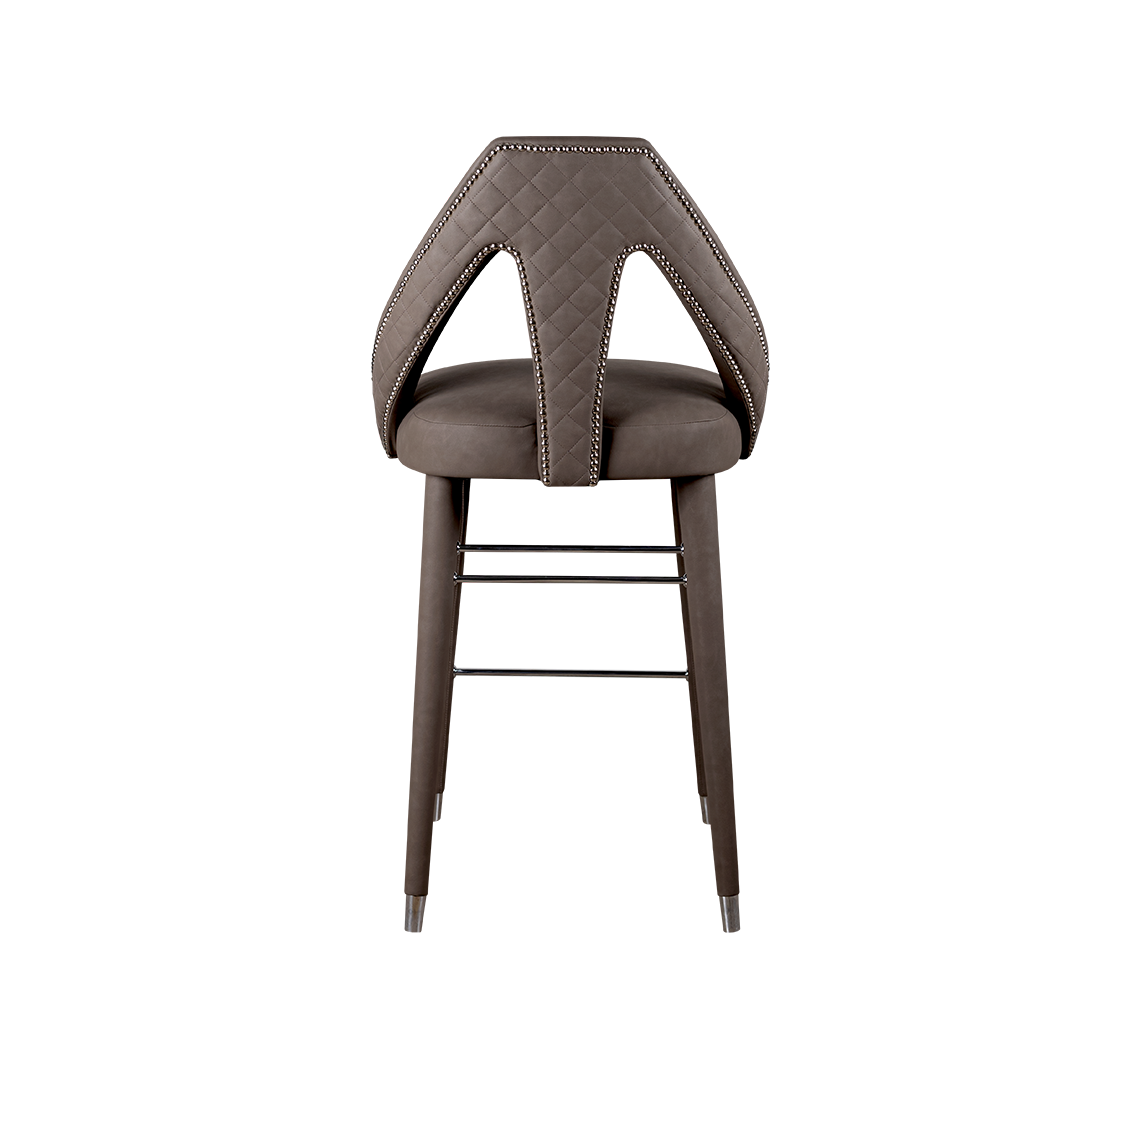 Caron Bar Chair